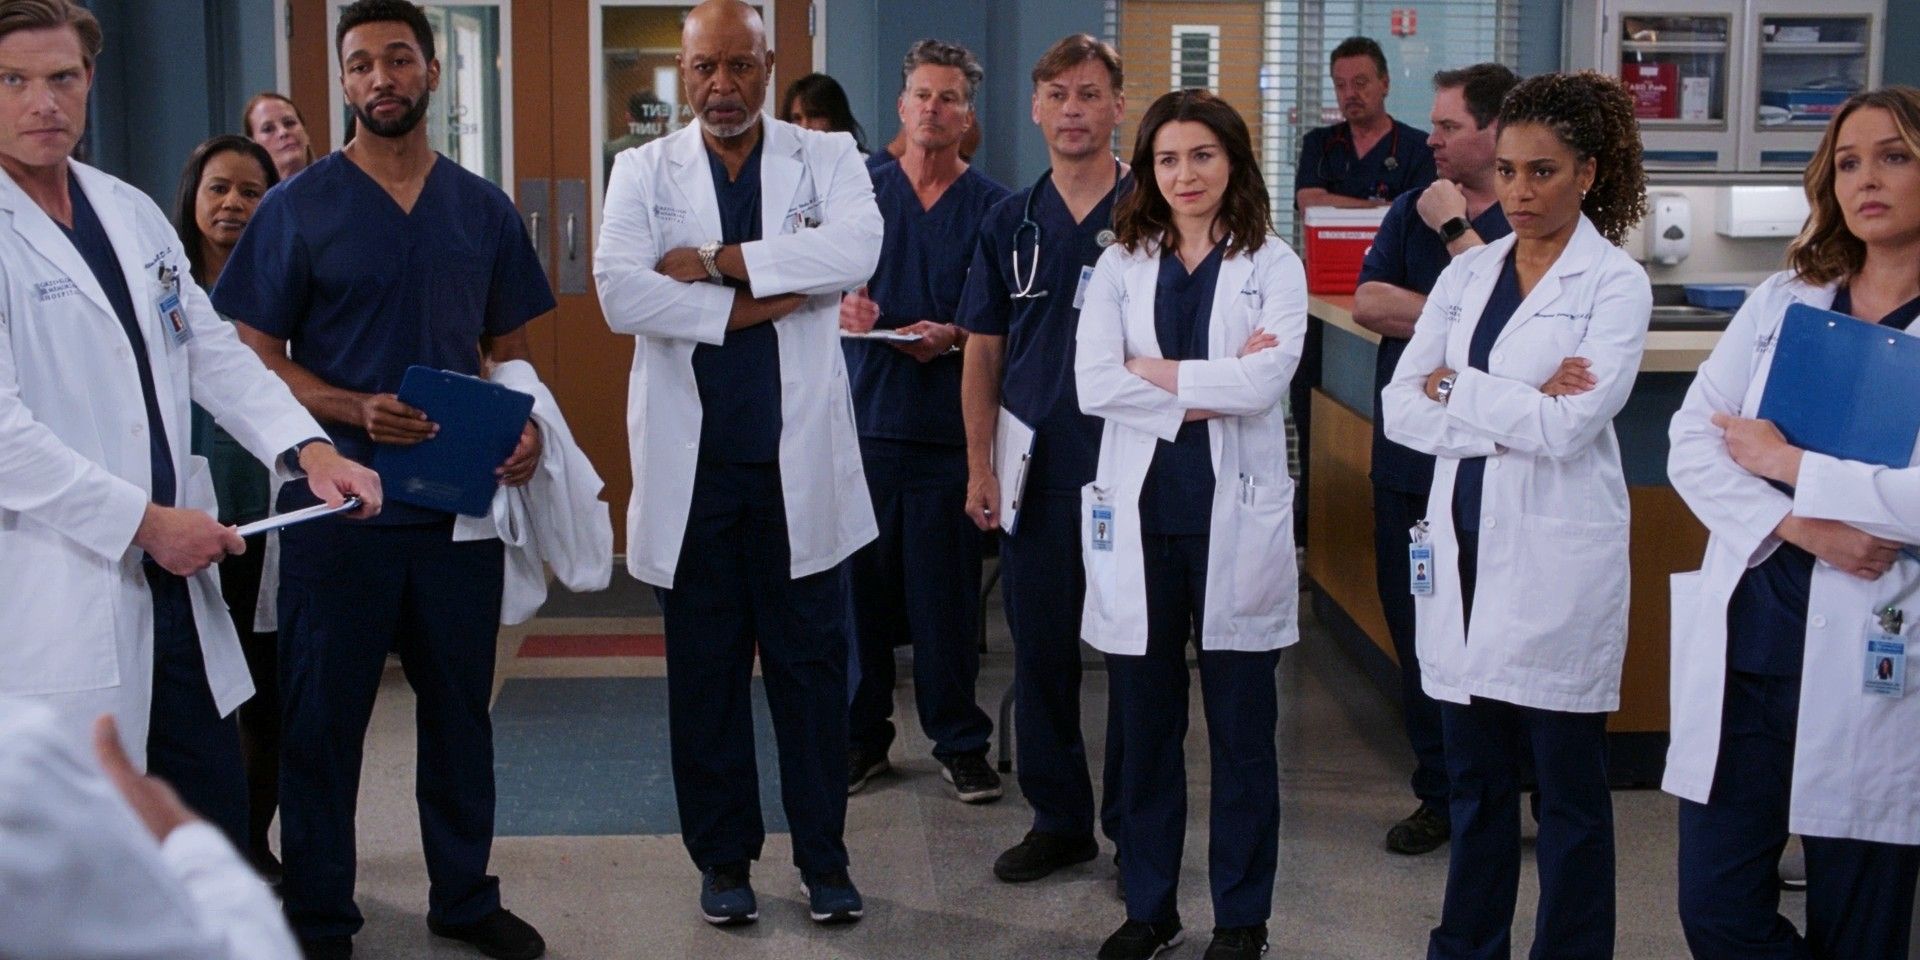 The Grey's Anatomy season 18 cast